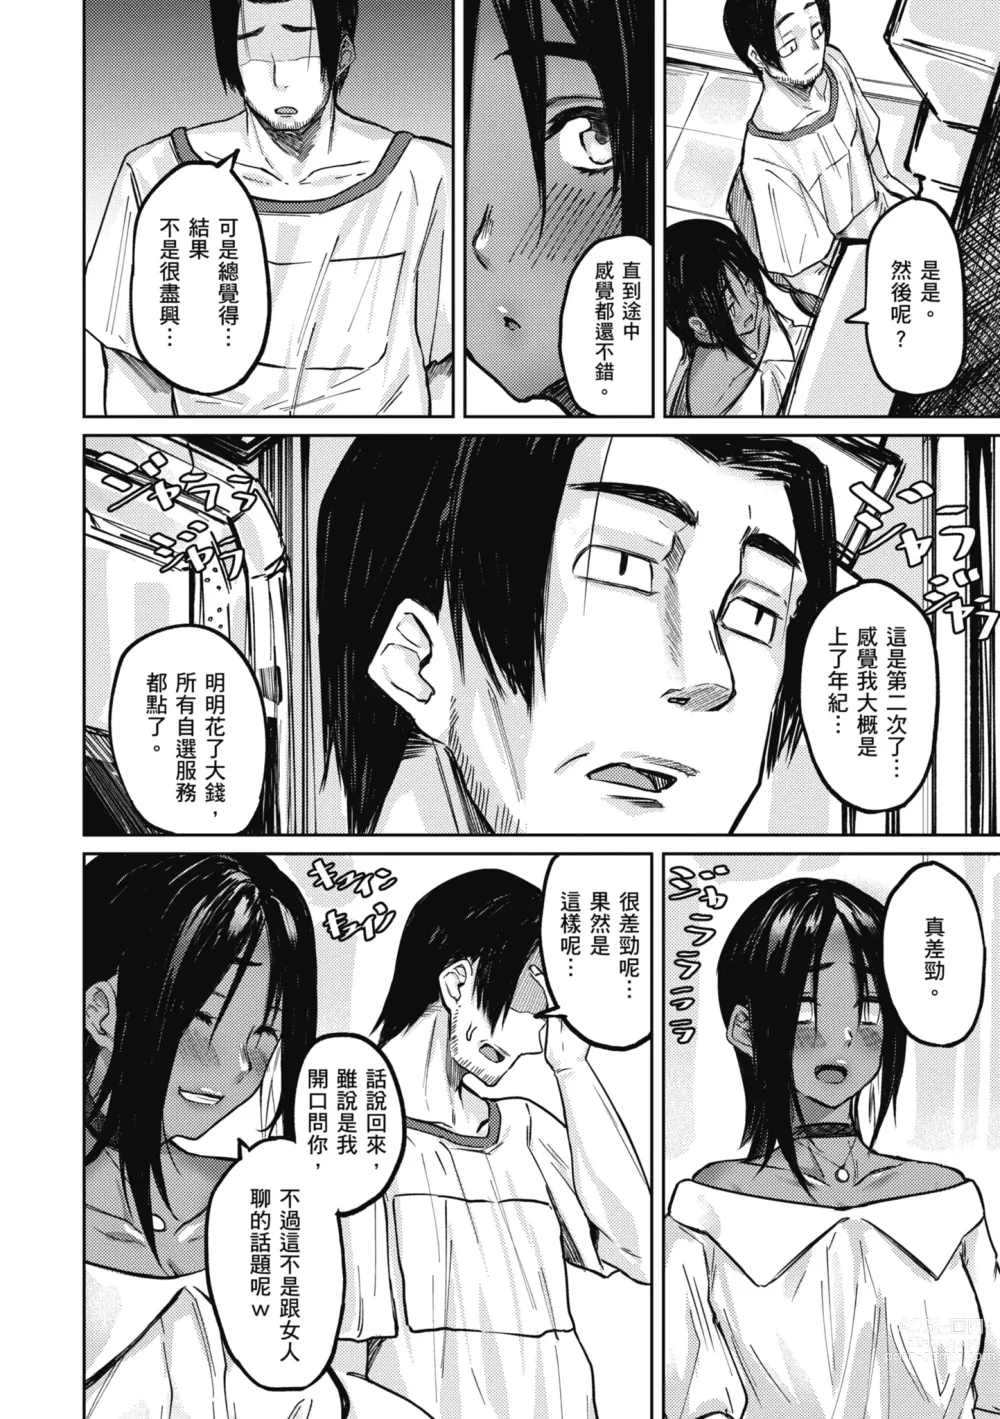 Page 4 of manga 性愛幸運兒 (decensored)